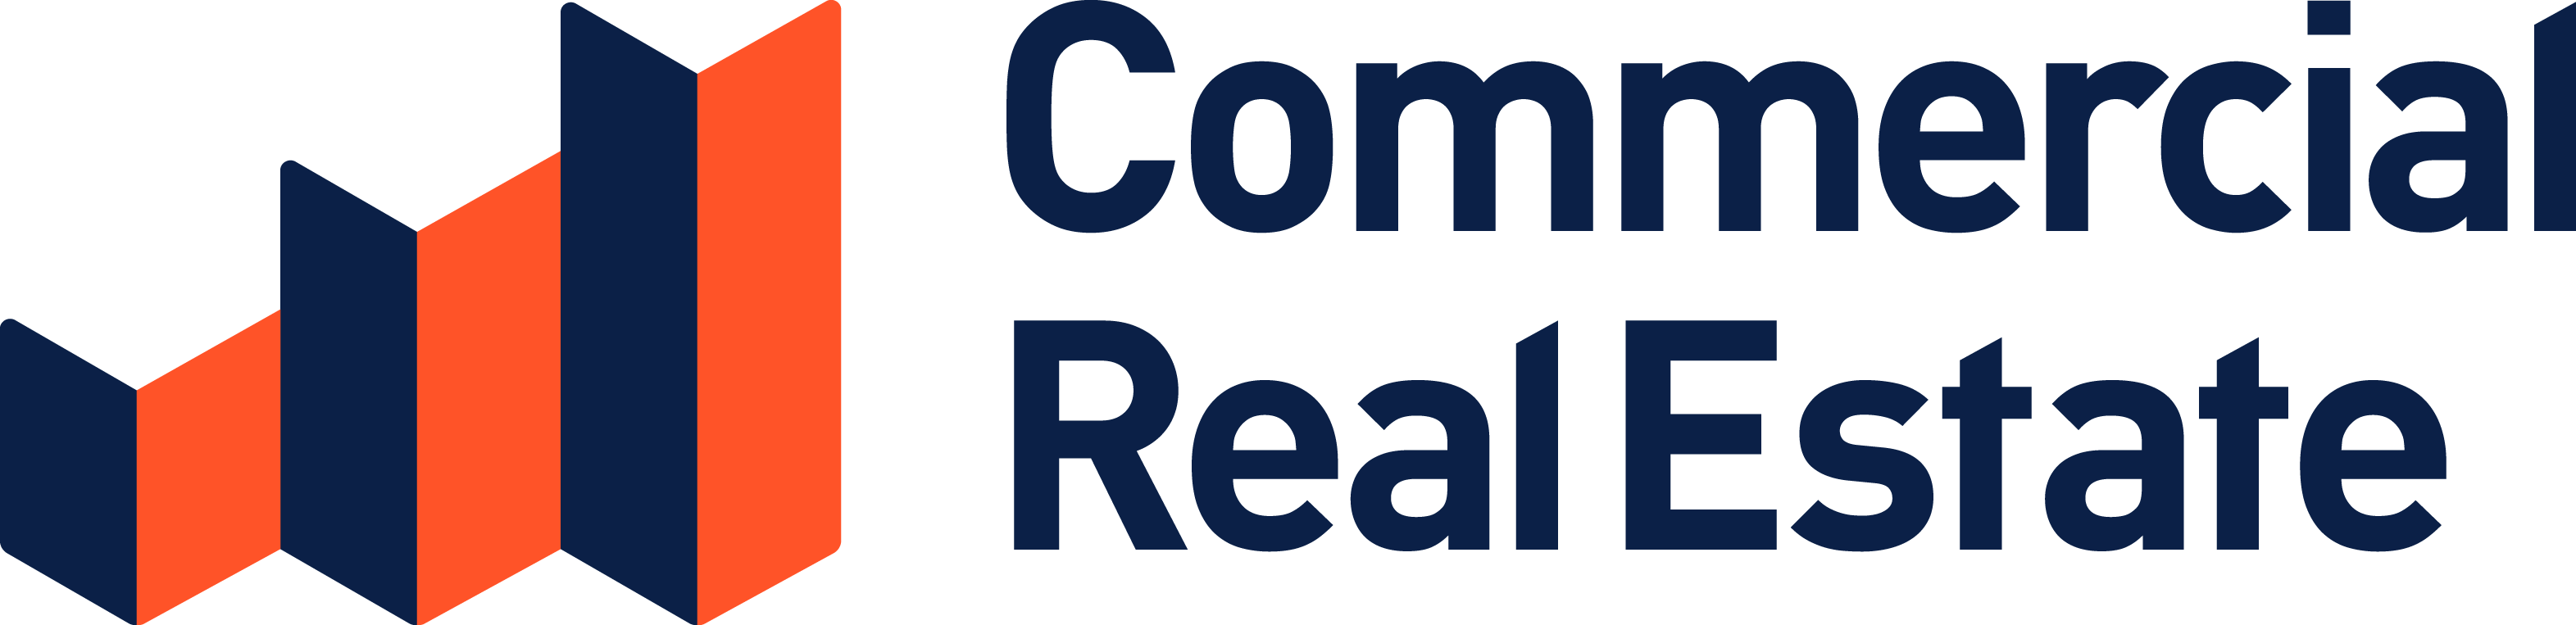 Commercial Real Estate Logo - Domain Group Logos - Domain Group